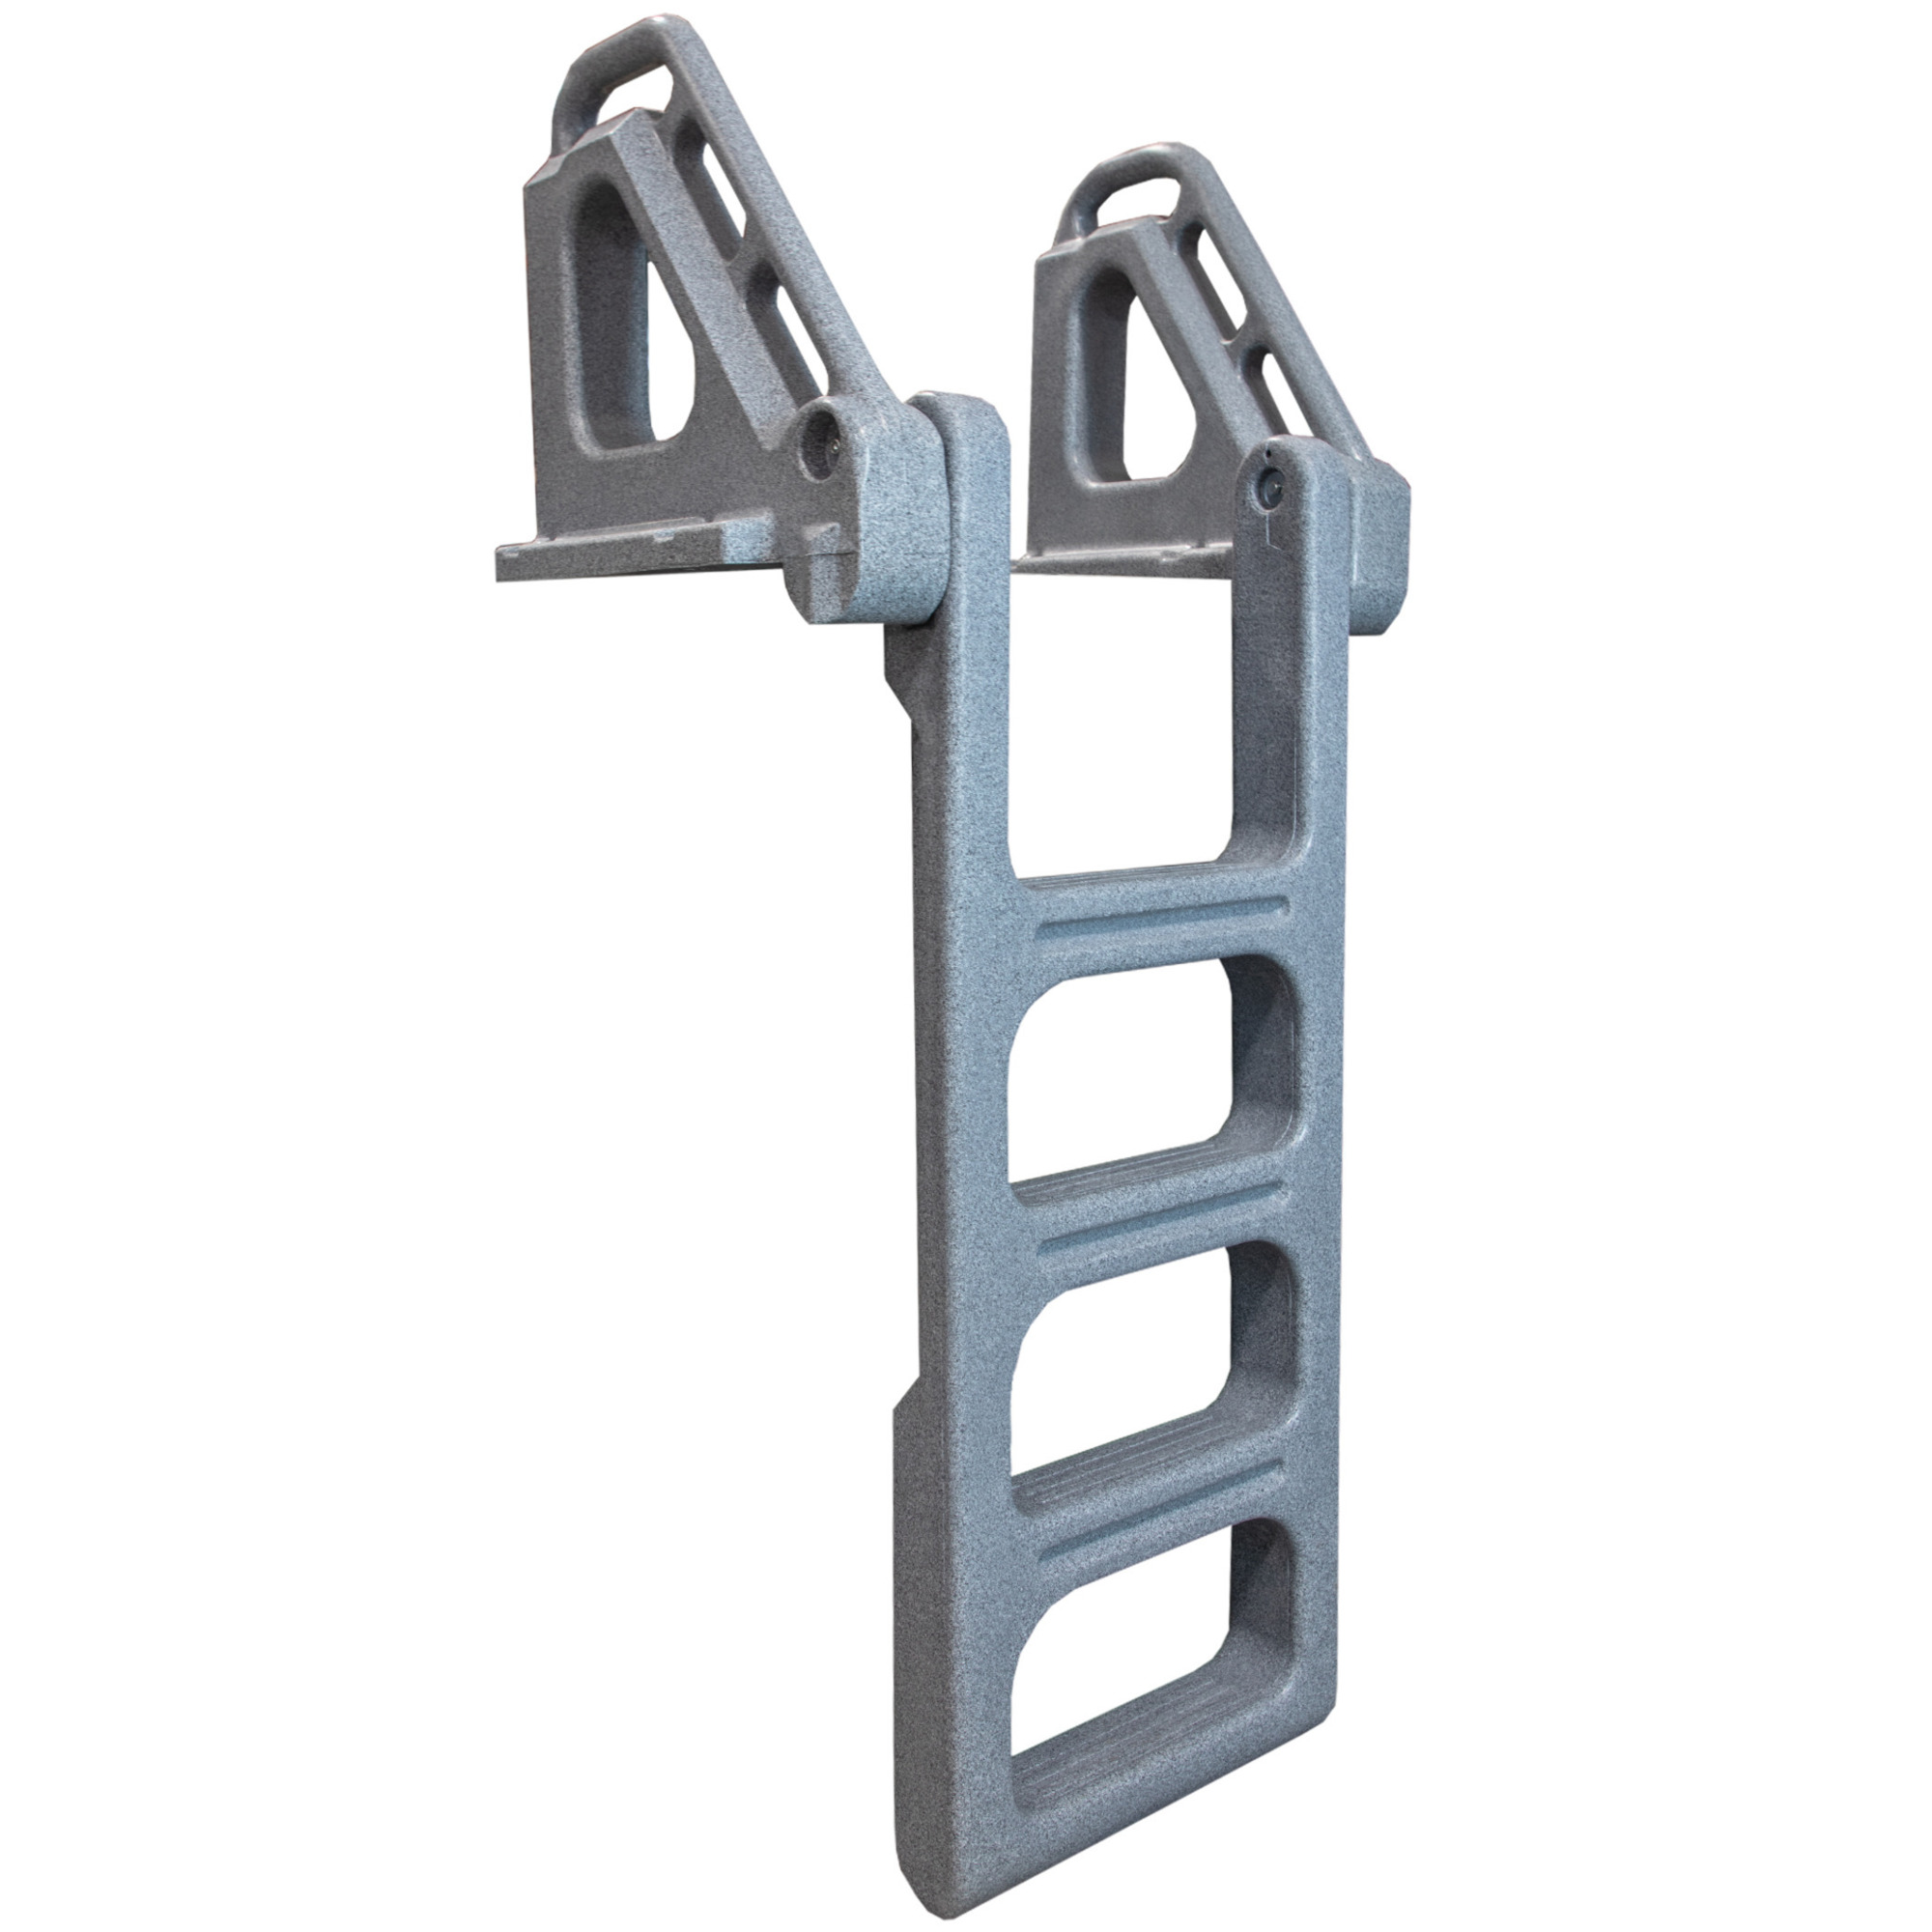 Tommy Docks, Flexx DL-4 Ladder Kit, Product Type Ladder, Length 21 in, Width 18 in, Model TDFX-207